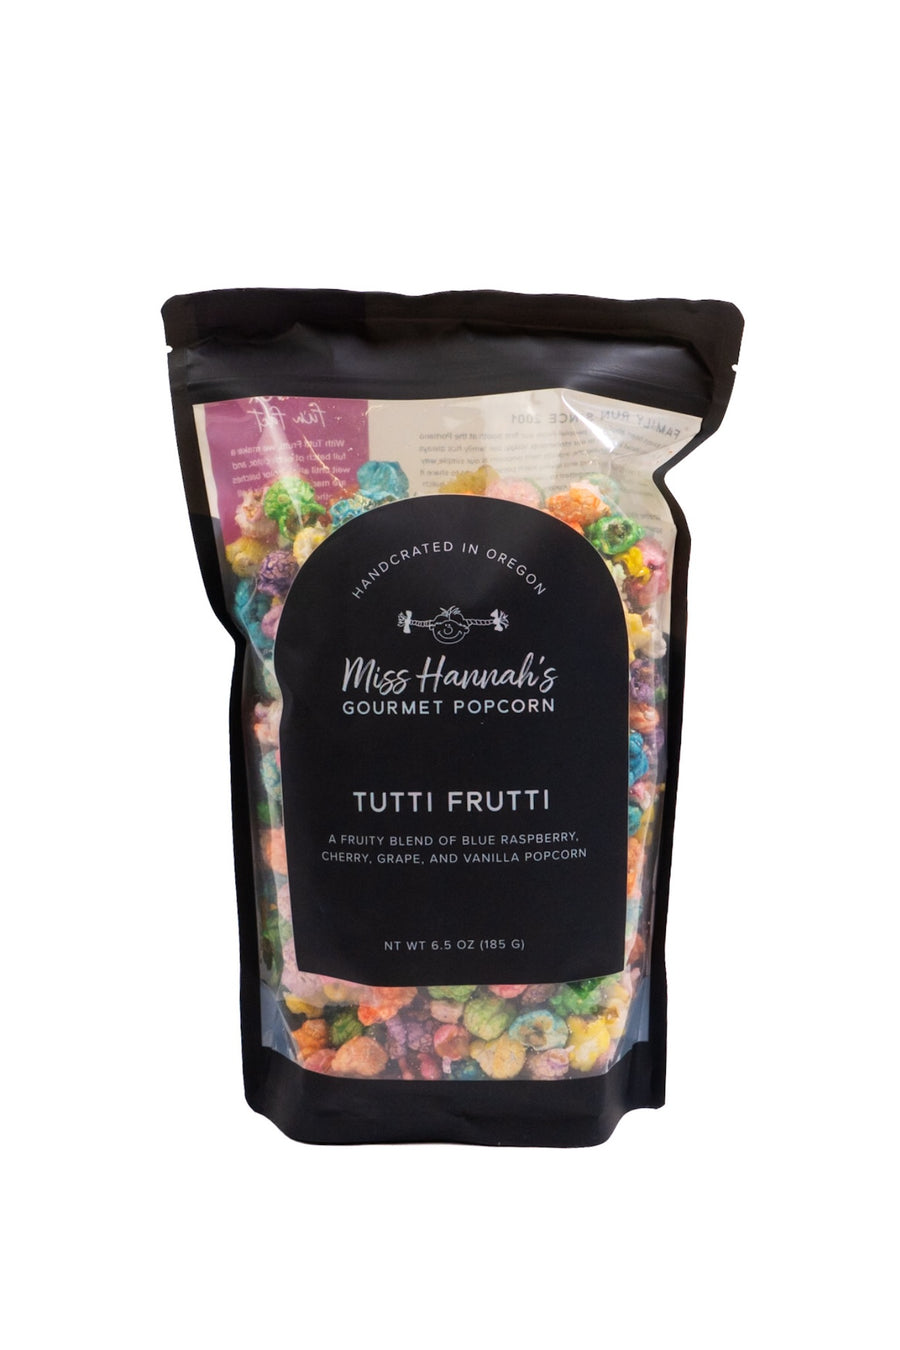 Tutti Frutti by Miss Hannah's Gourmet Popcorn